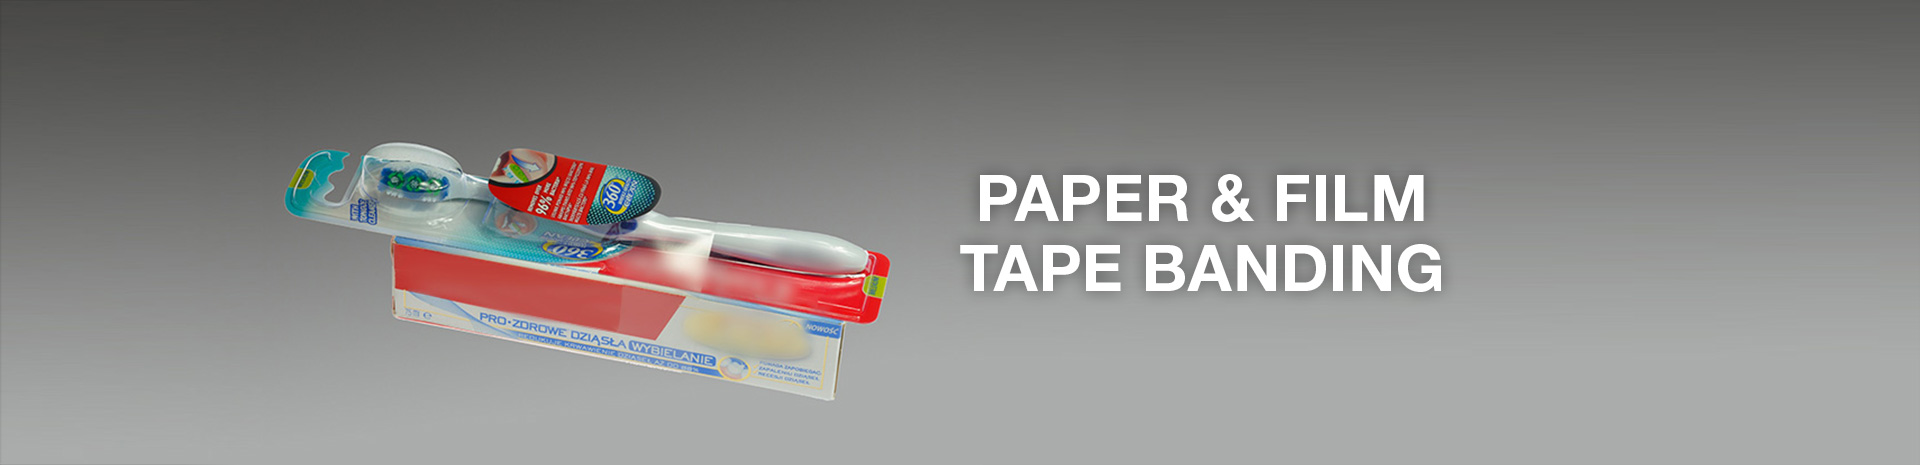 Paper & Film Tape Banding